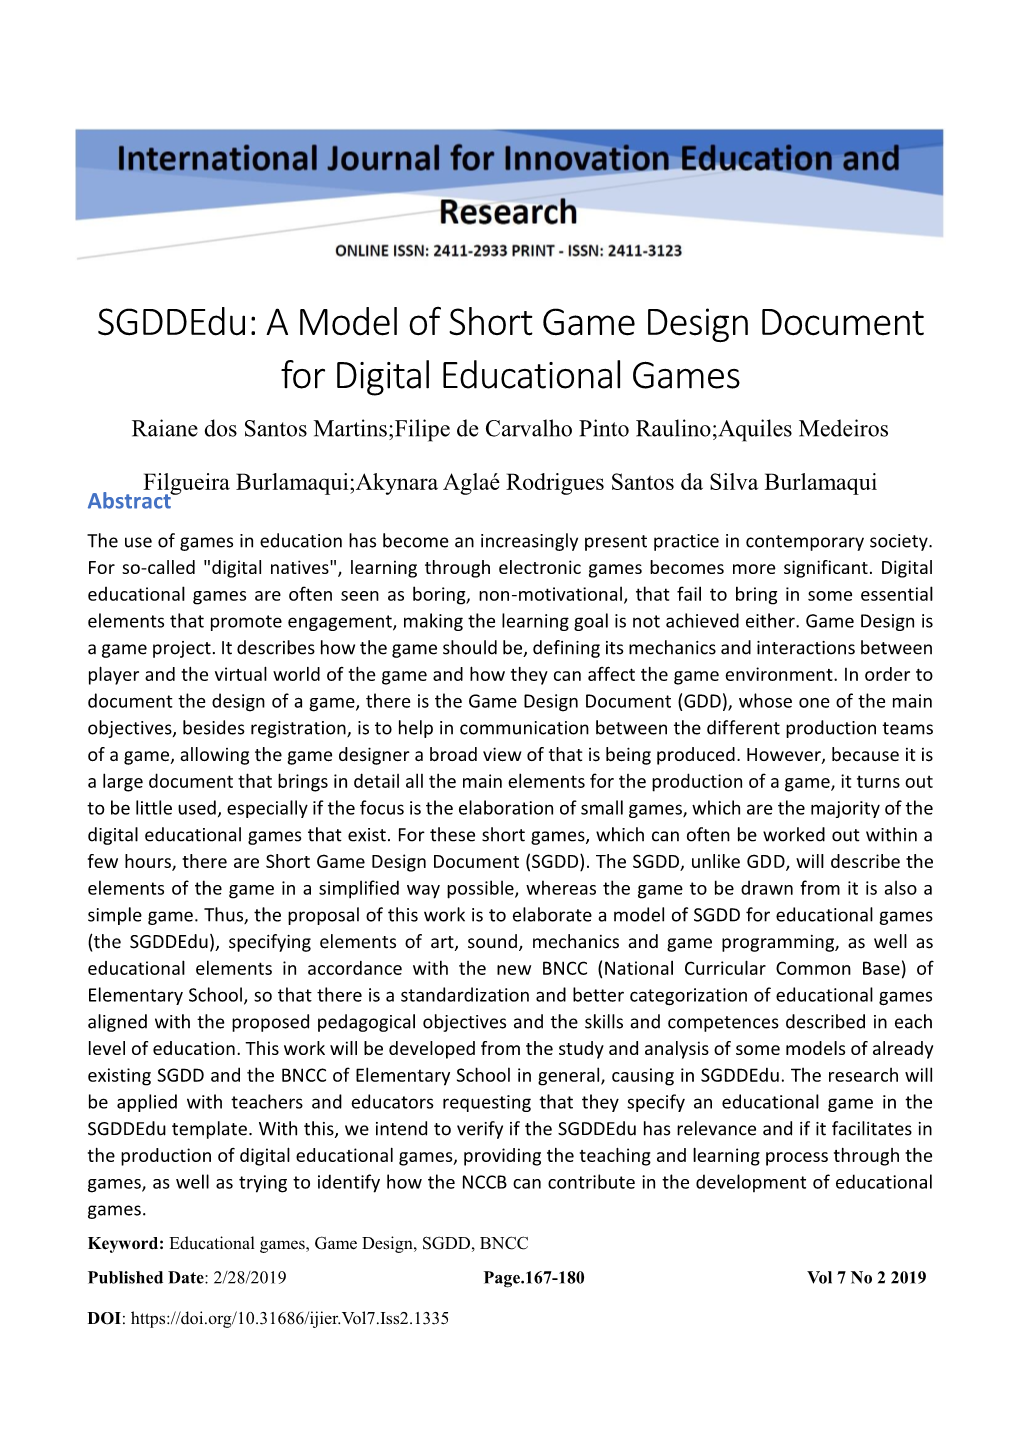 A Model of Short Game Design Document for Digital Educational Games